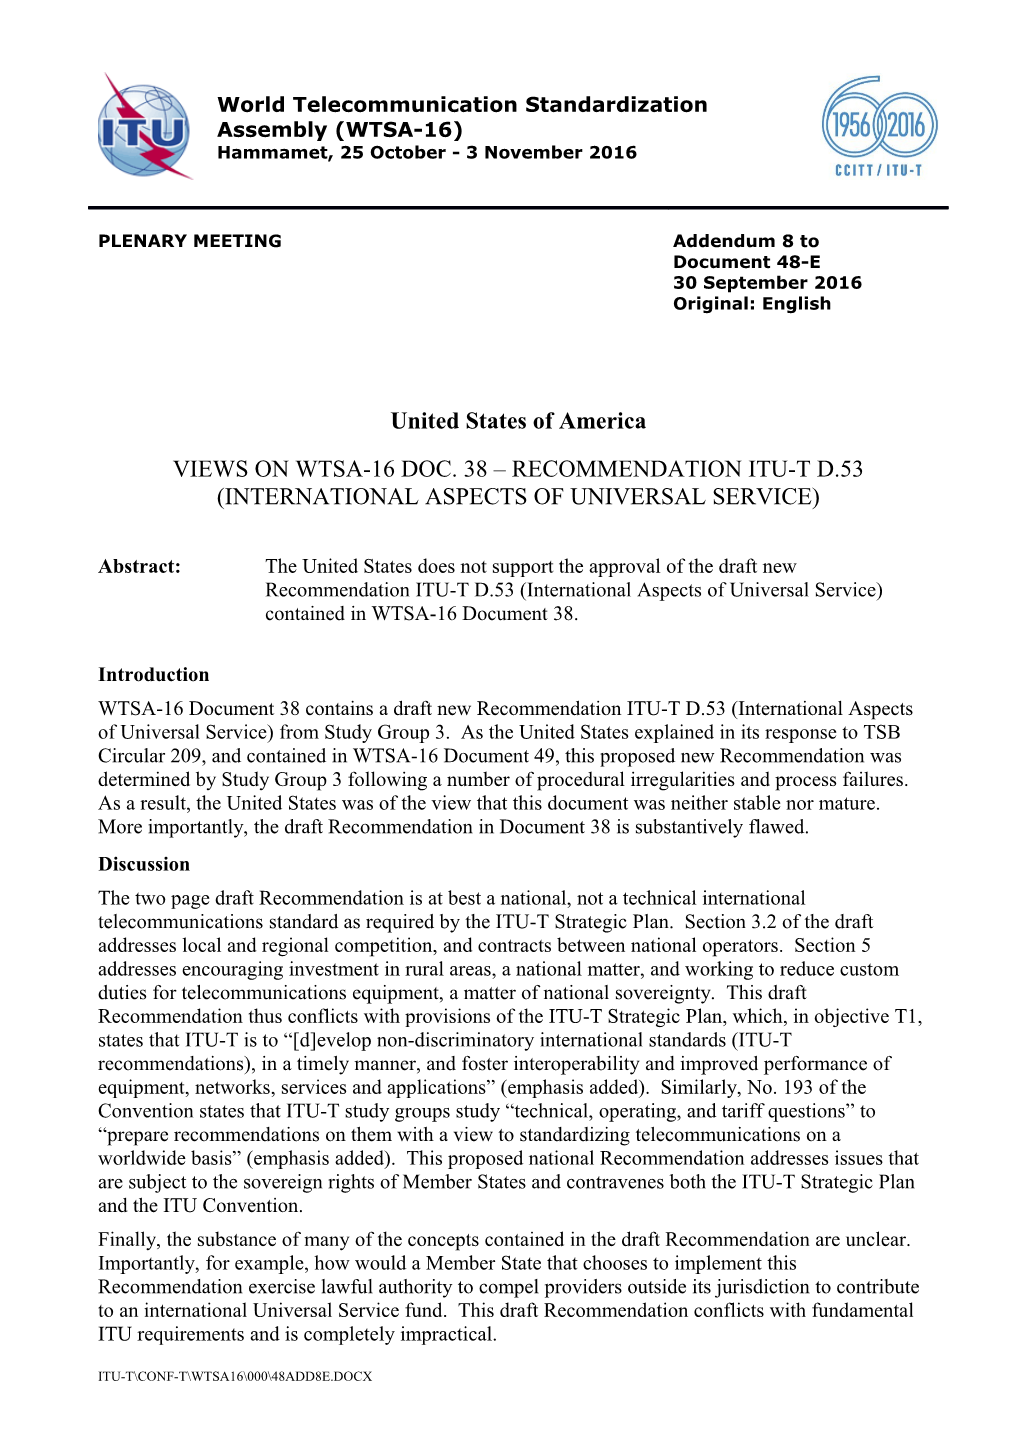 WTSA-16 Document 38 Contains a Draft New Recommendation ITU-T D.53 (International Aspects